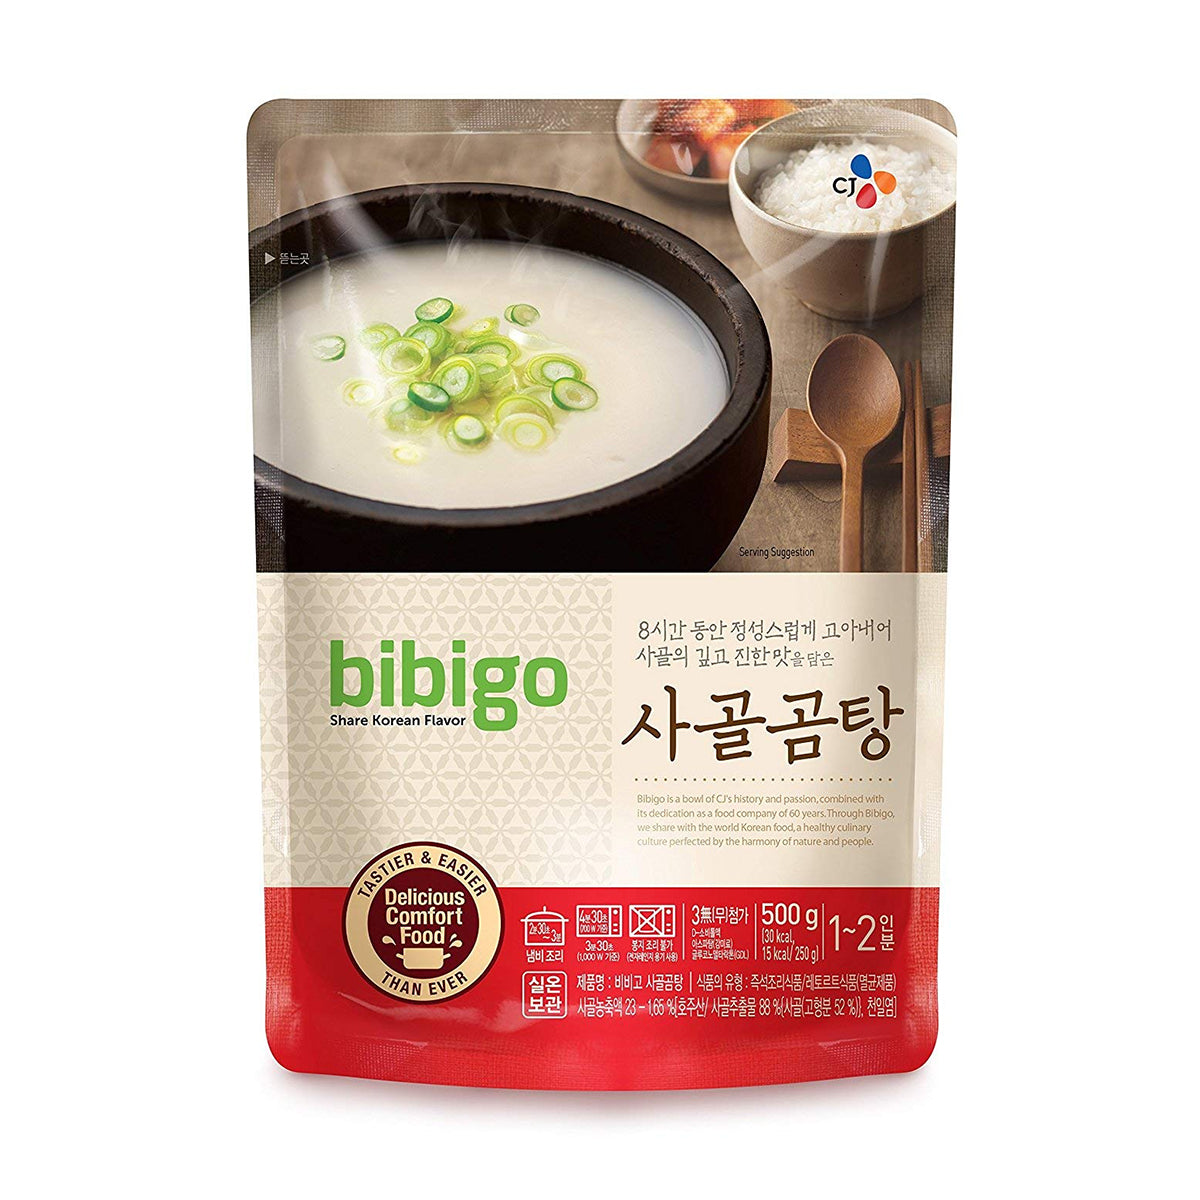 bibigo beef stock soup - 500g